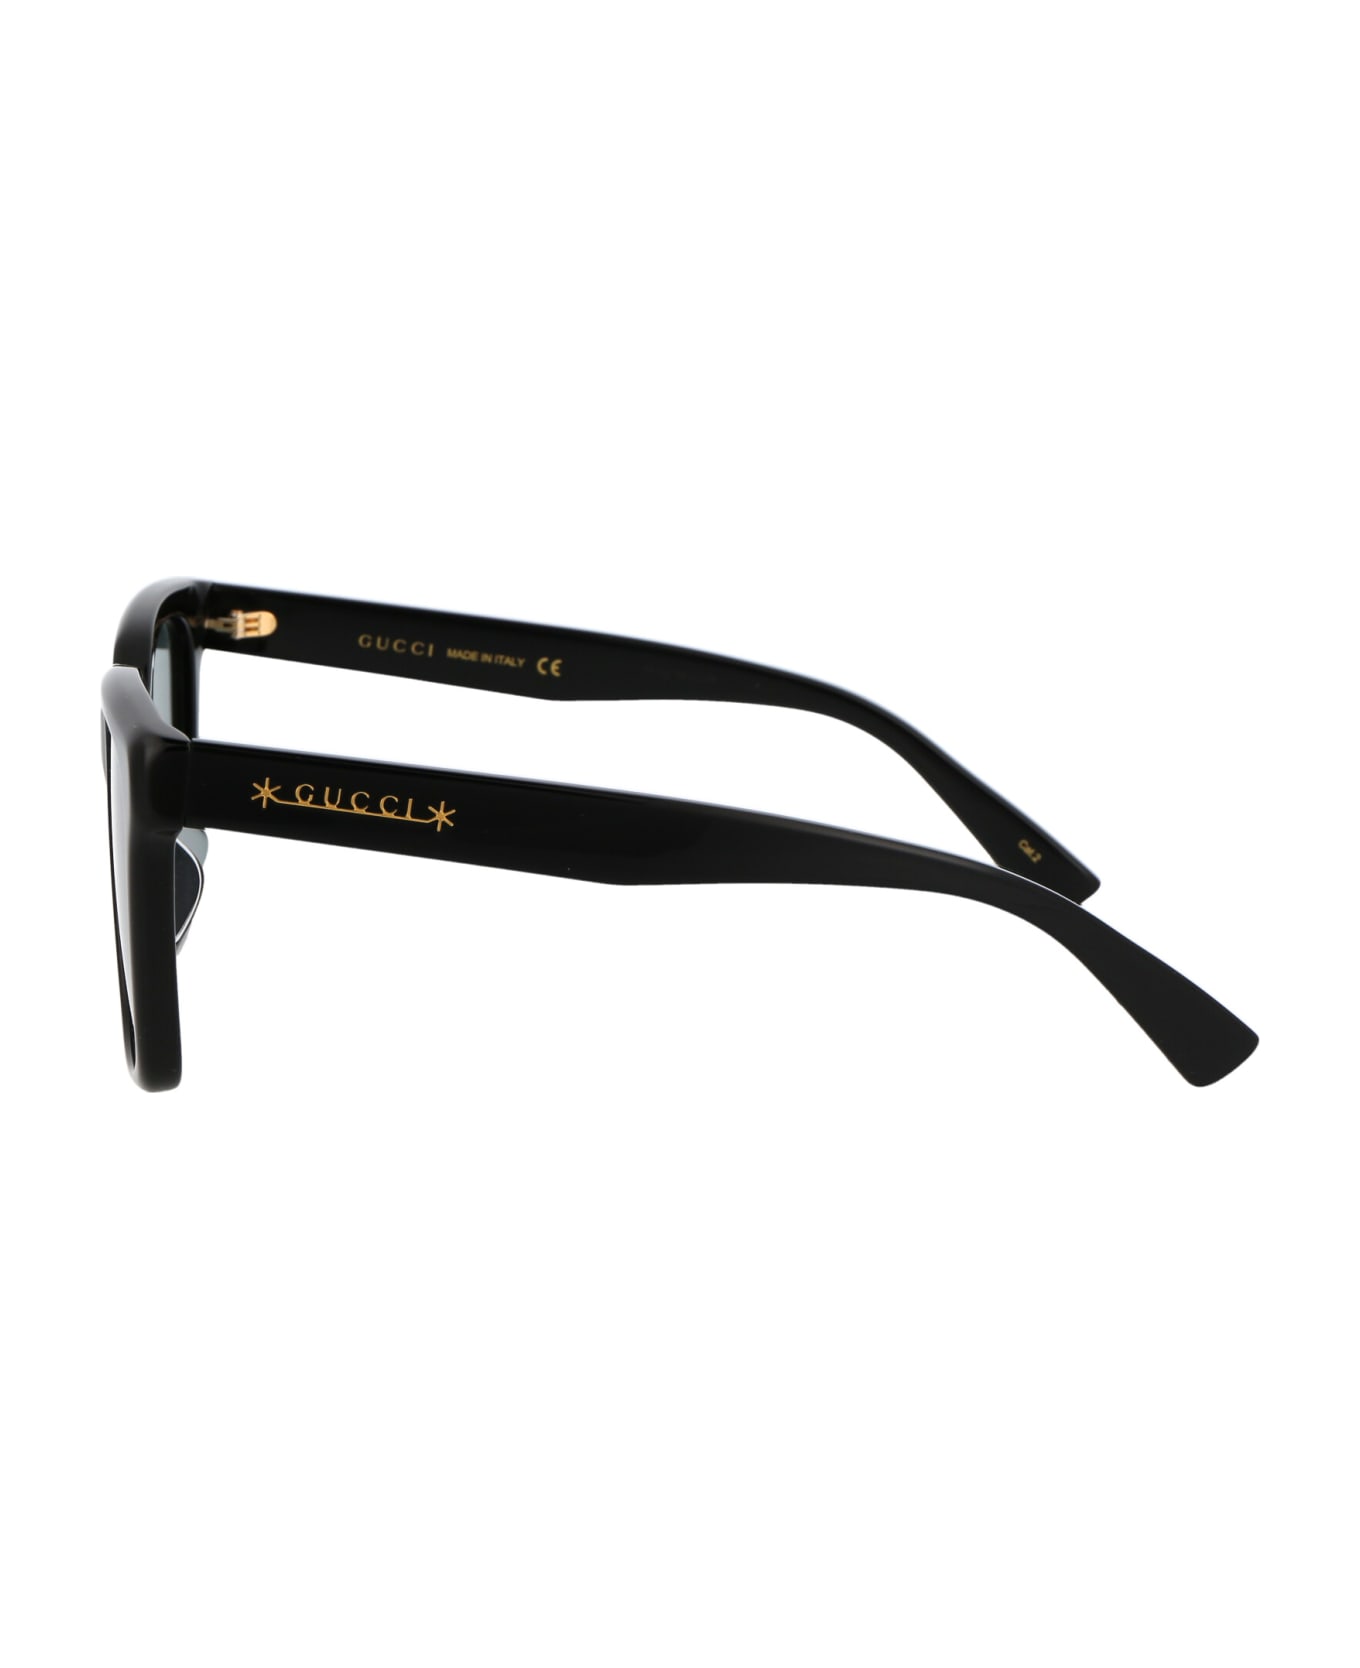 Gucci Eyewear Gg1175sk Sunglasses - 002 BLACK BLACK SMOKE